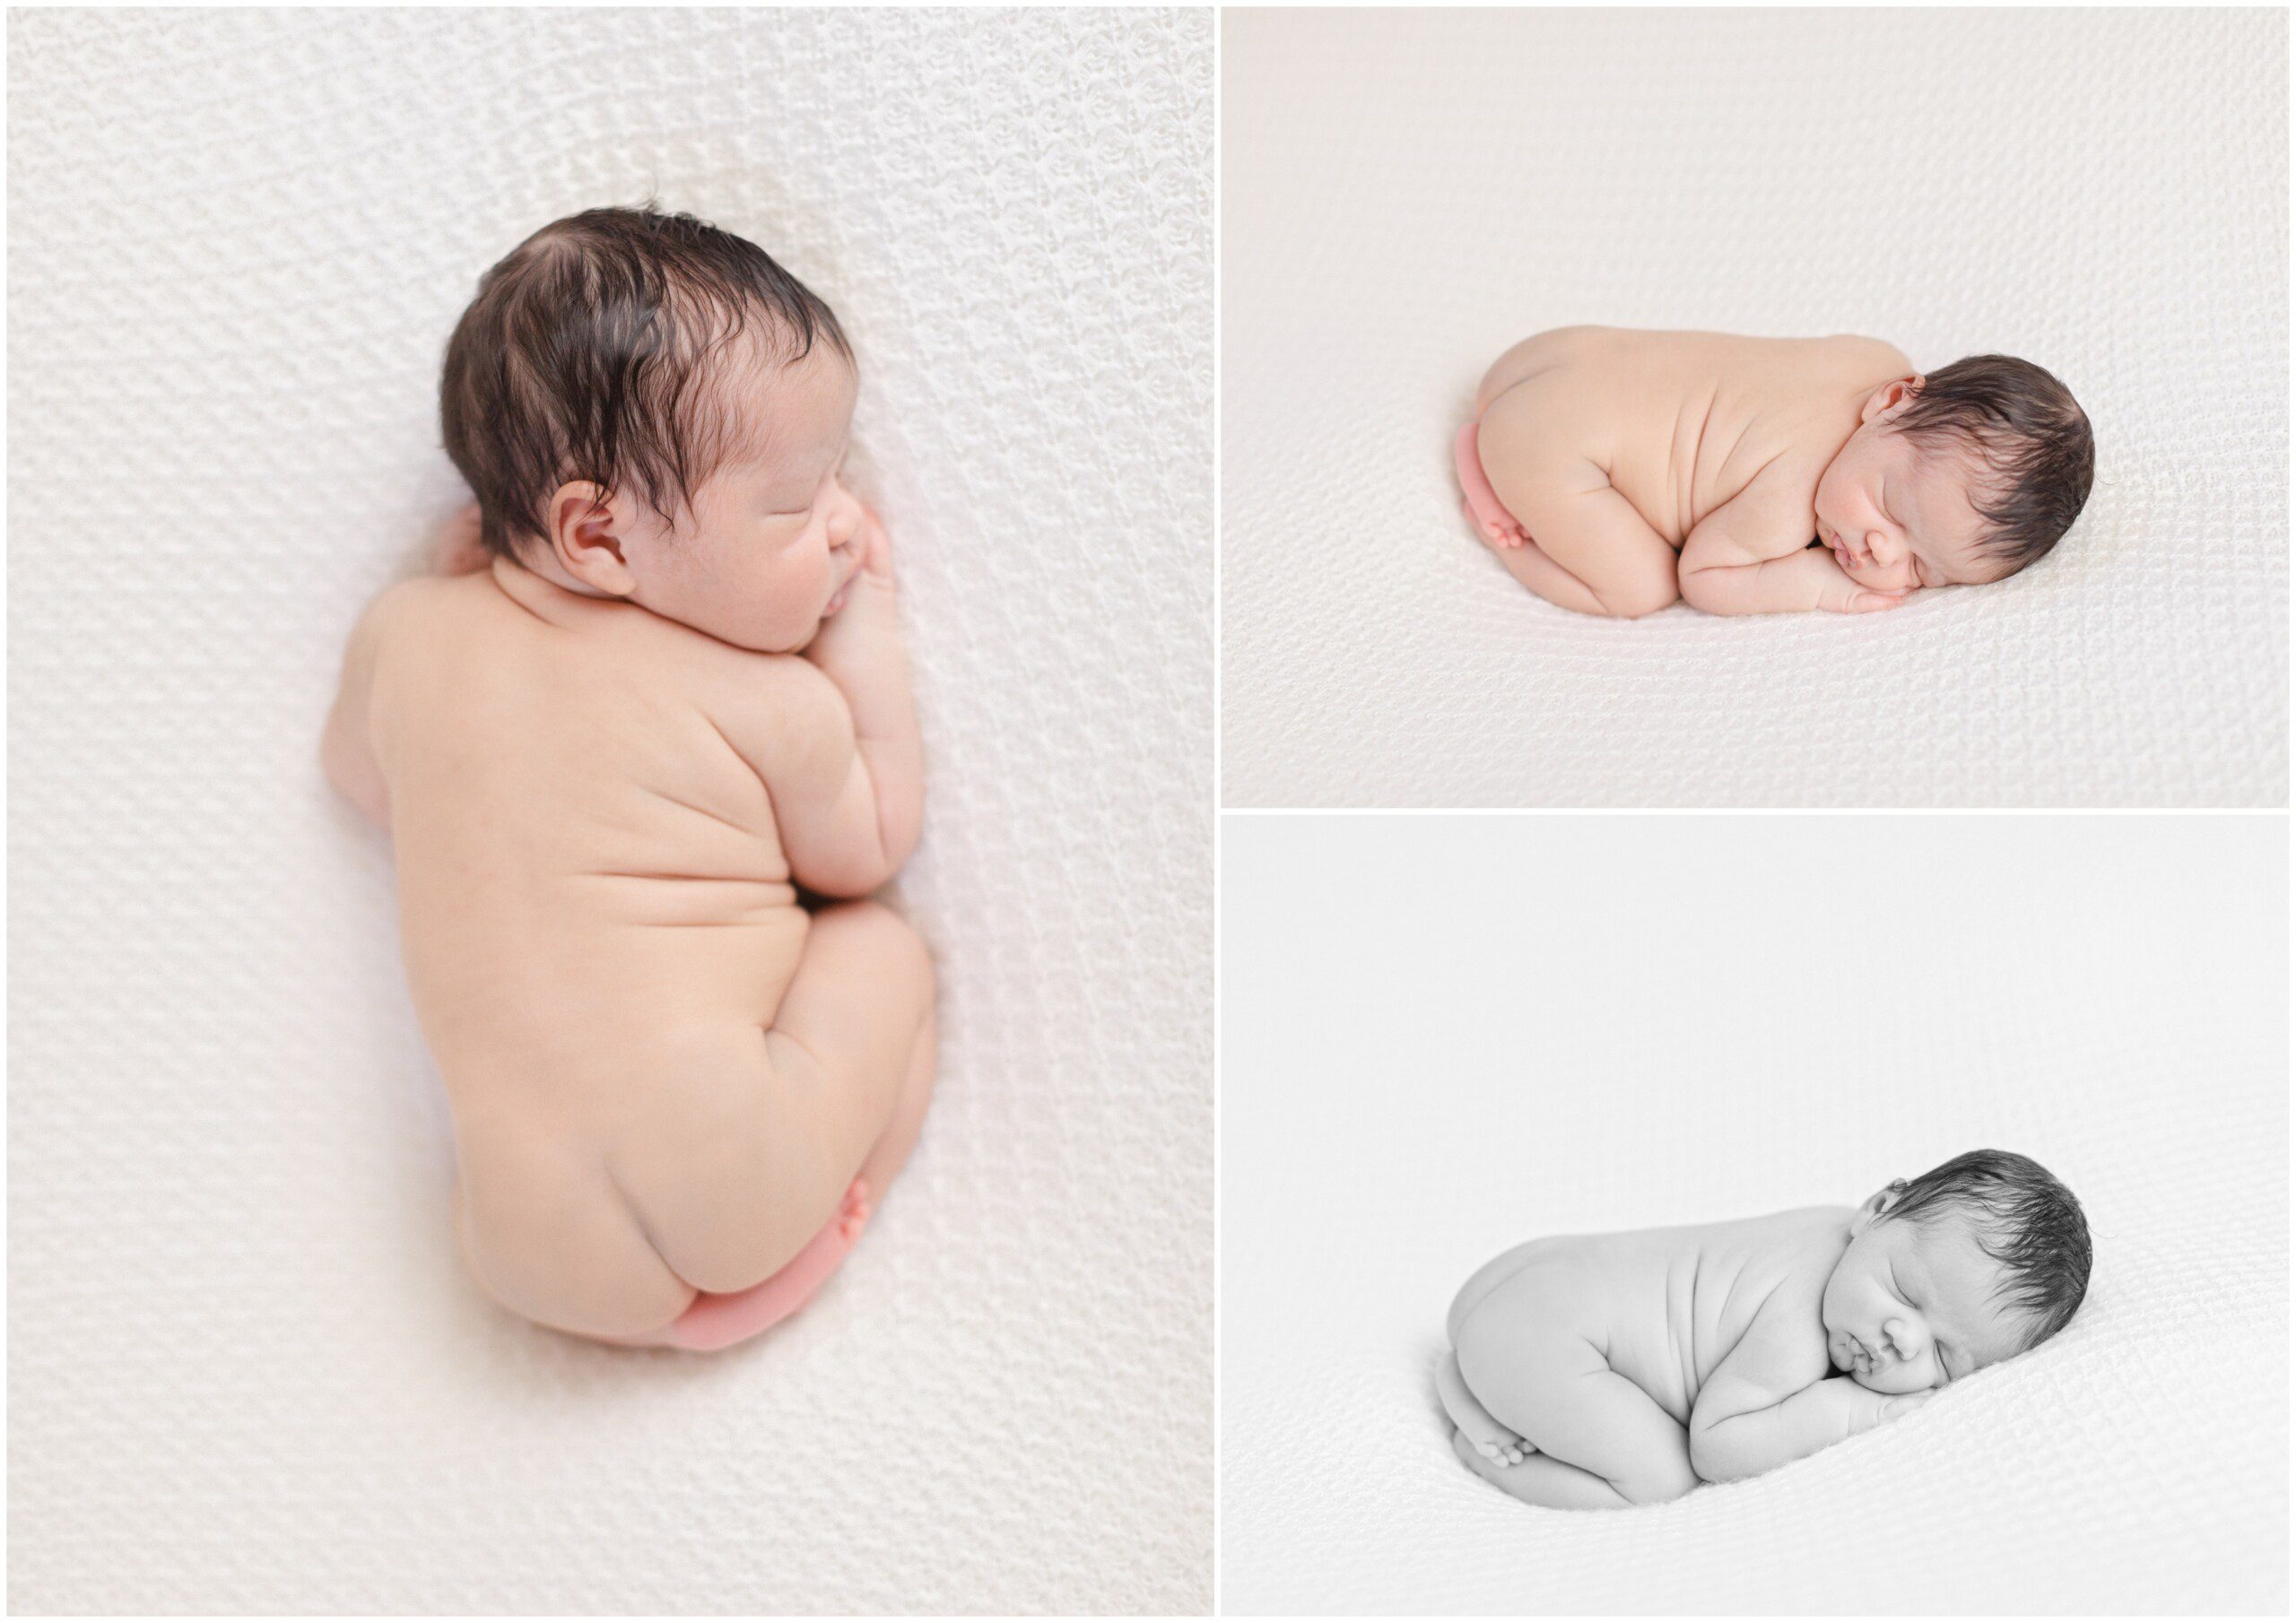 Athens newborn photographer portraits of sleeping baby